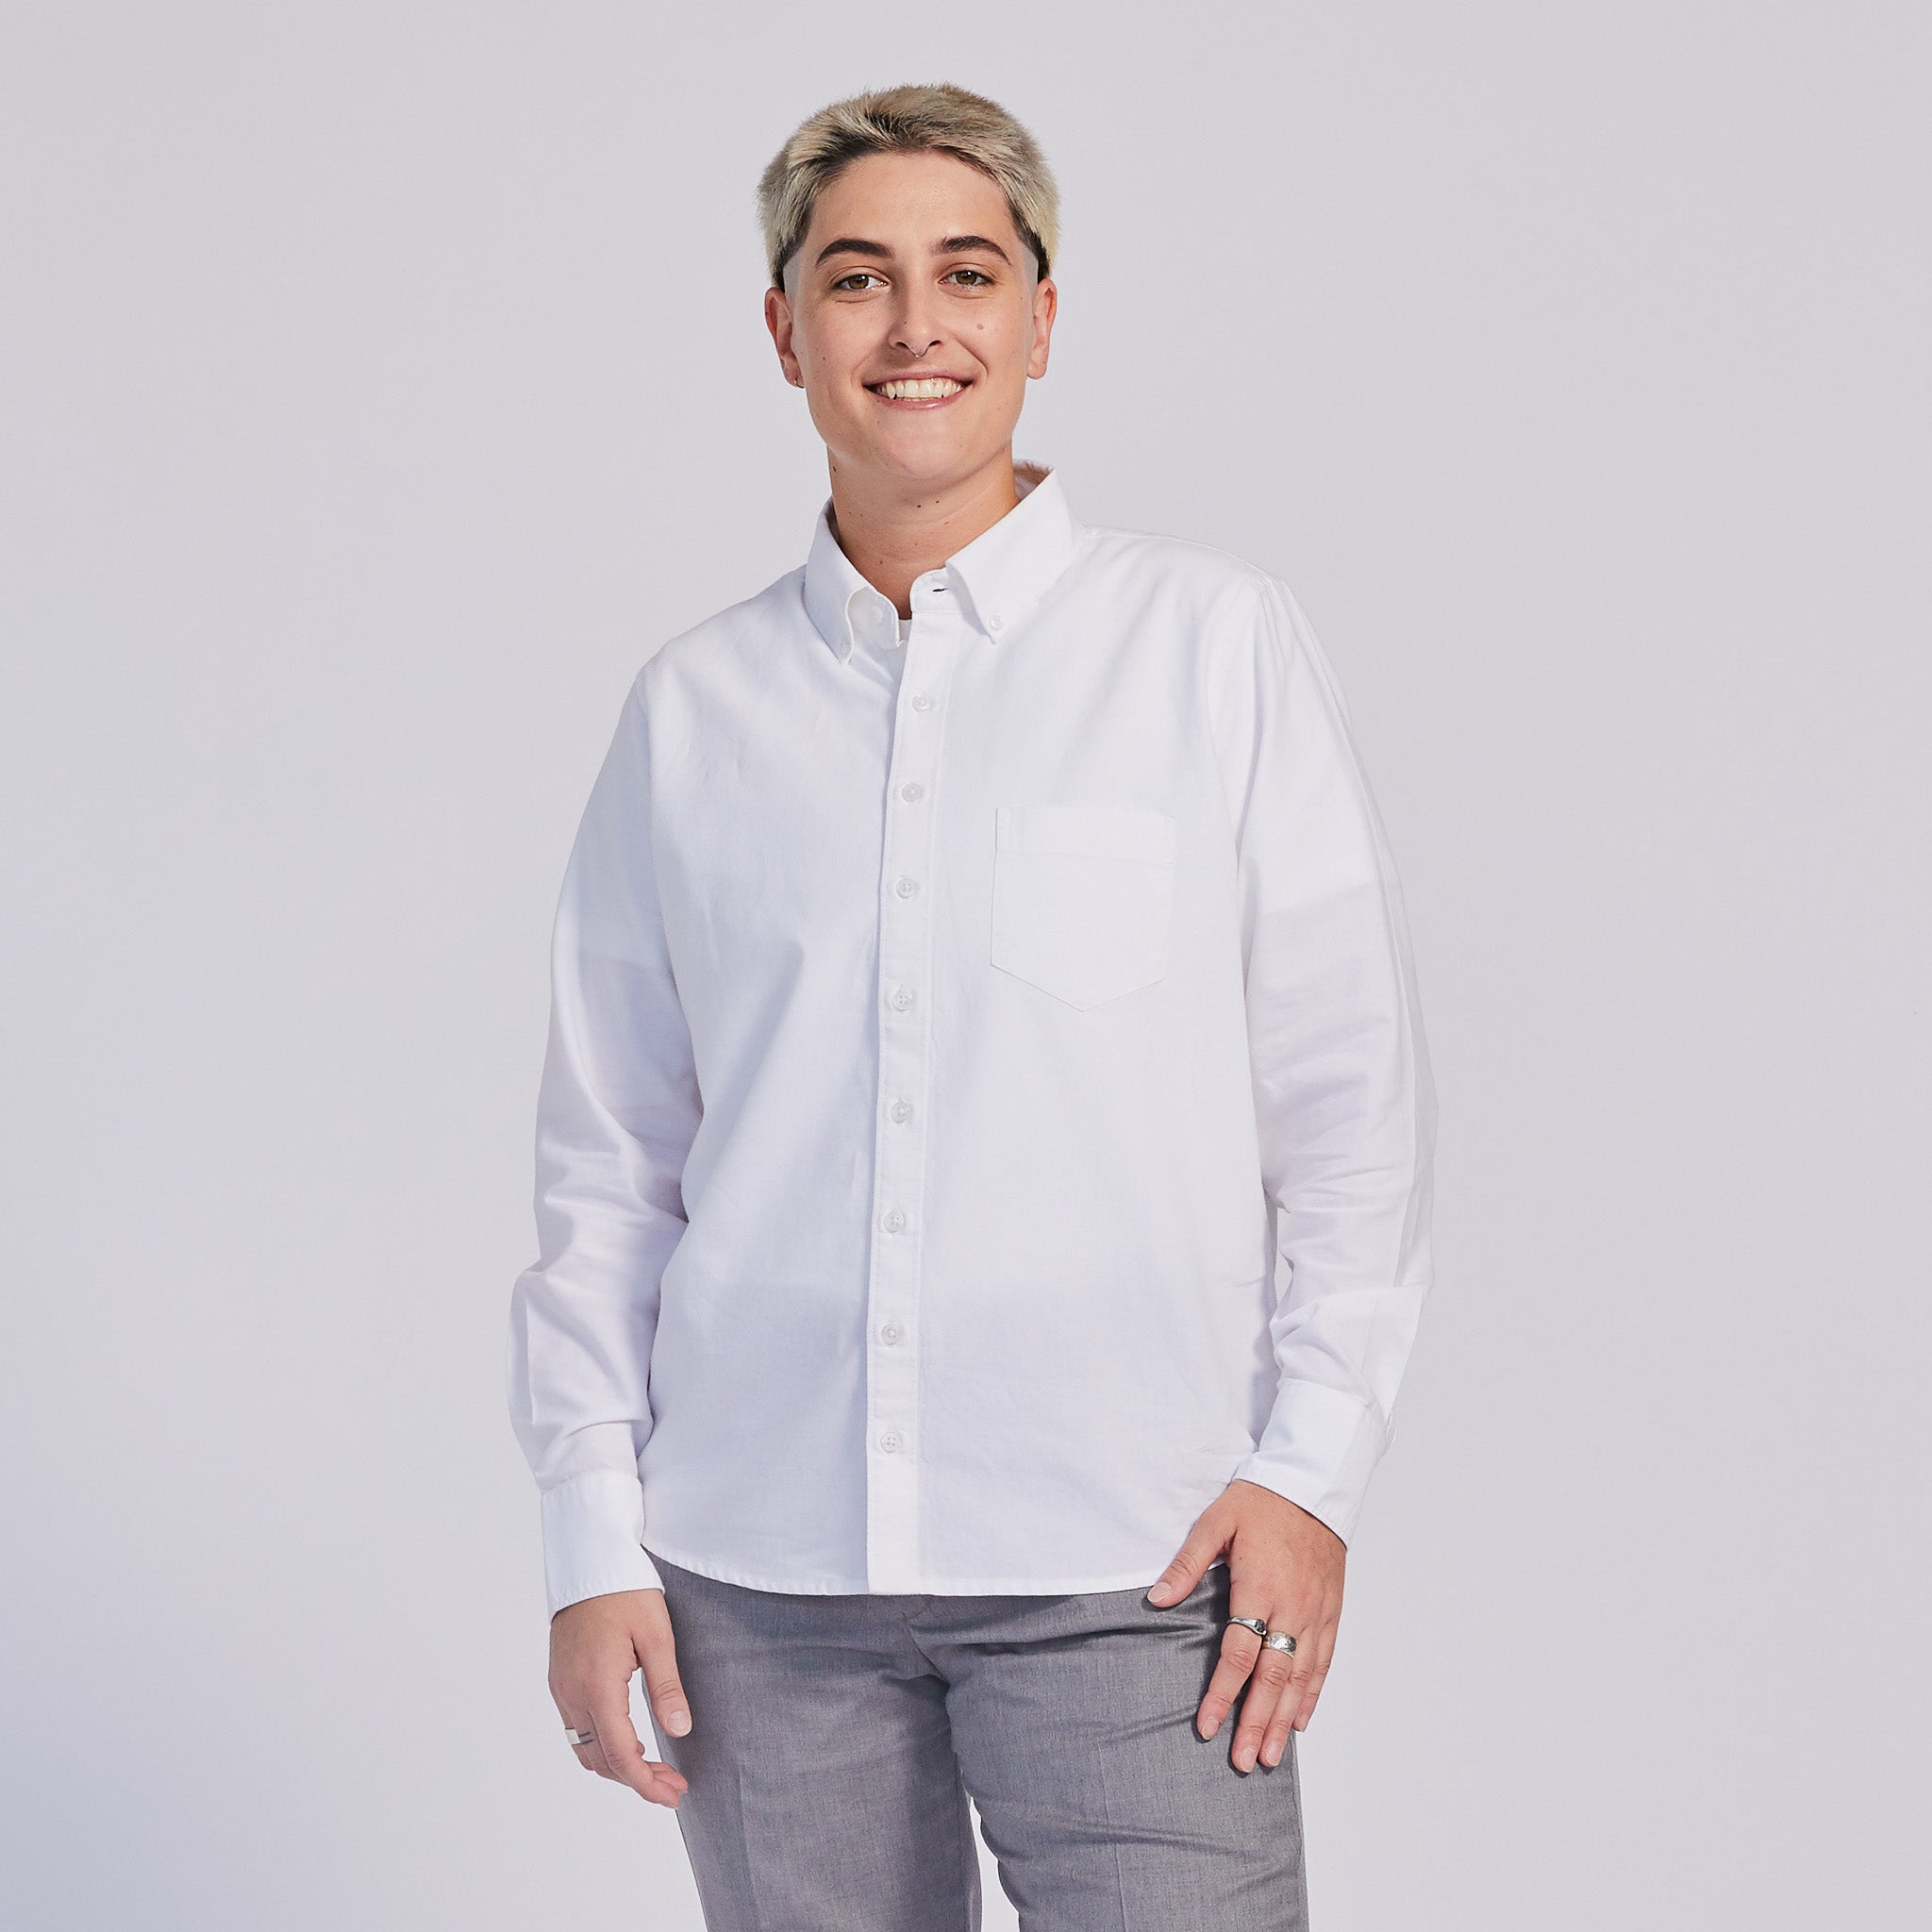 Masc model in white Oxford button down shirt